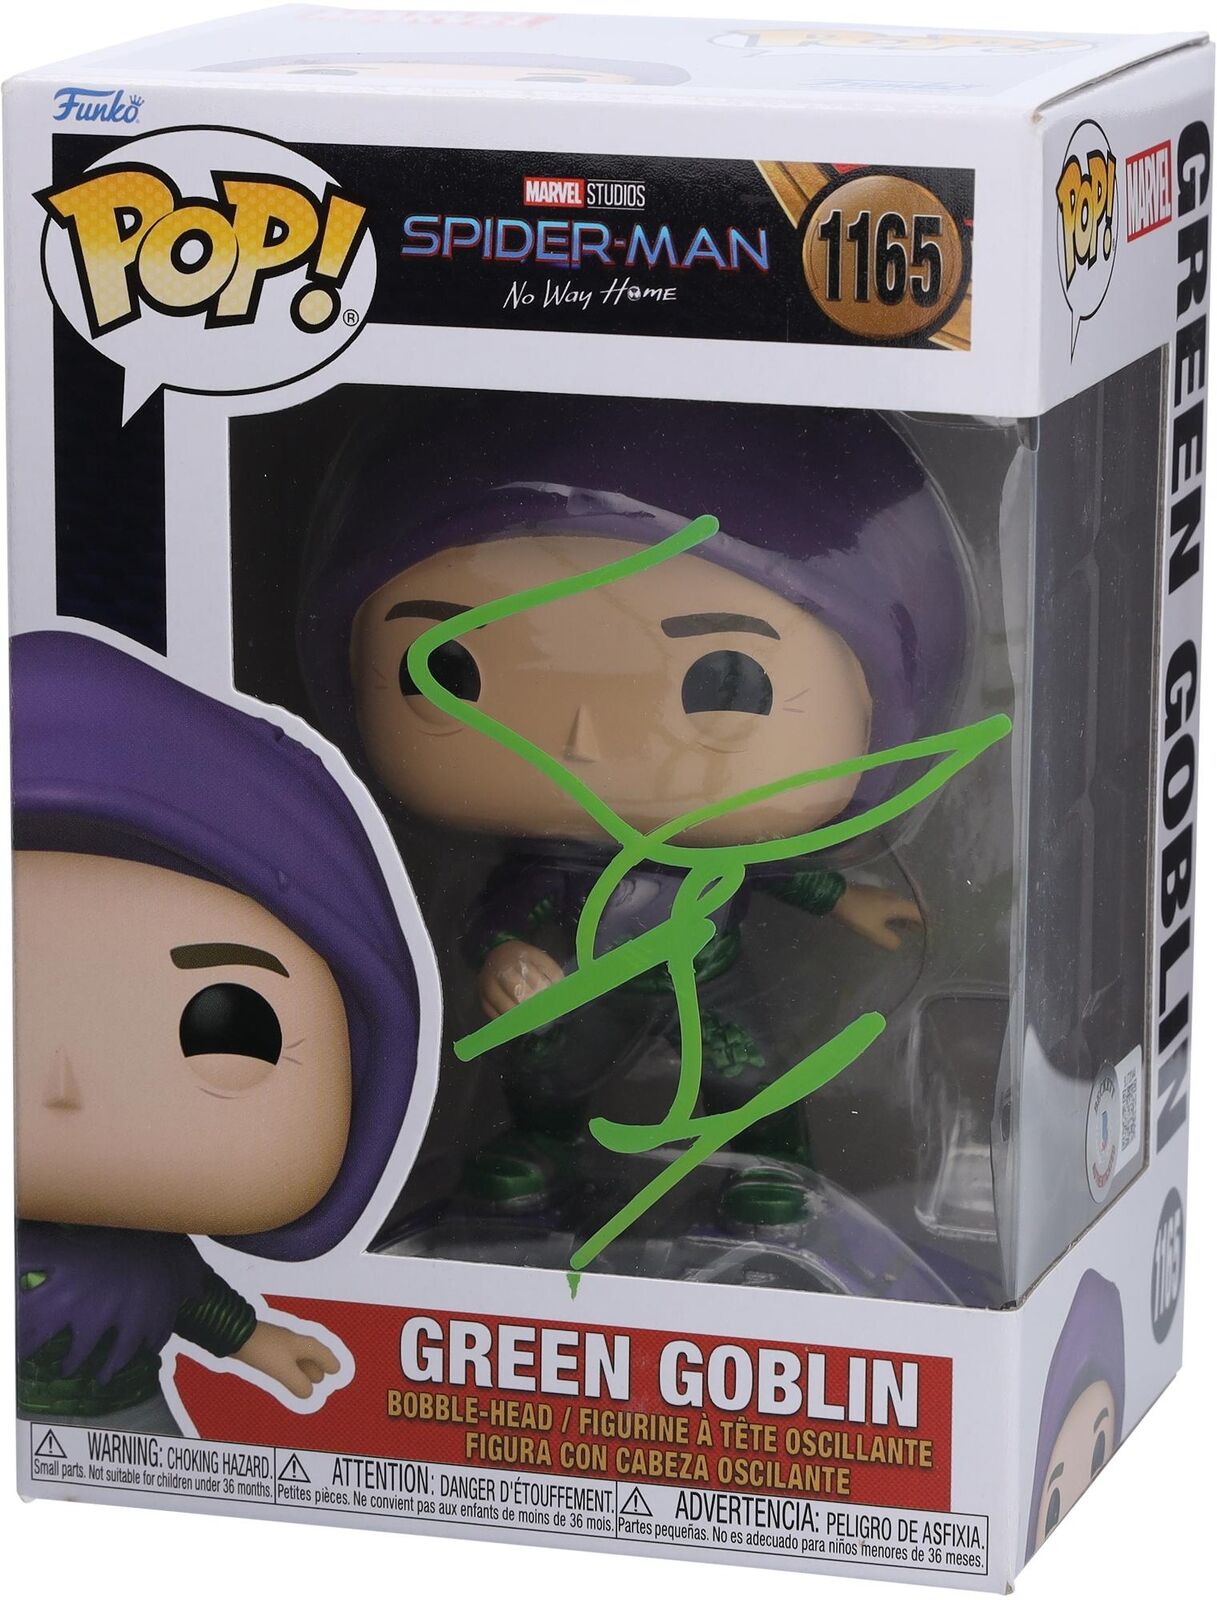 Willem Dafoe Spider-Man Autographed Green Goblin #1165 Funko Pop Figurine BAS